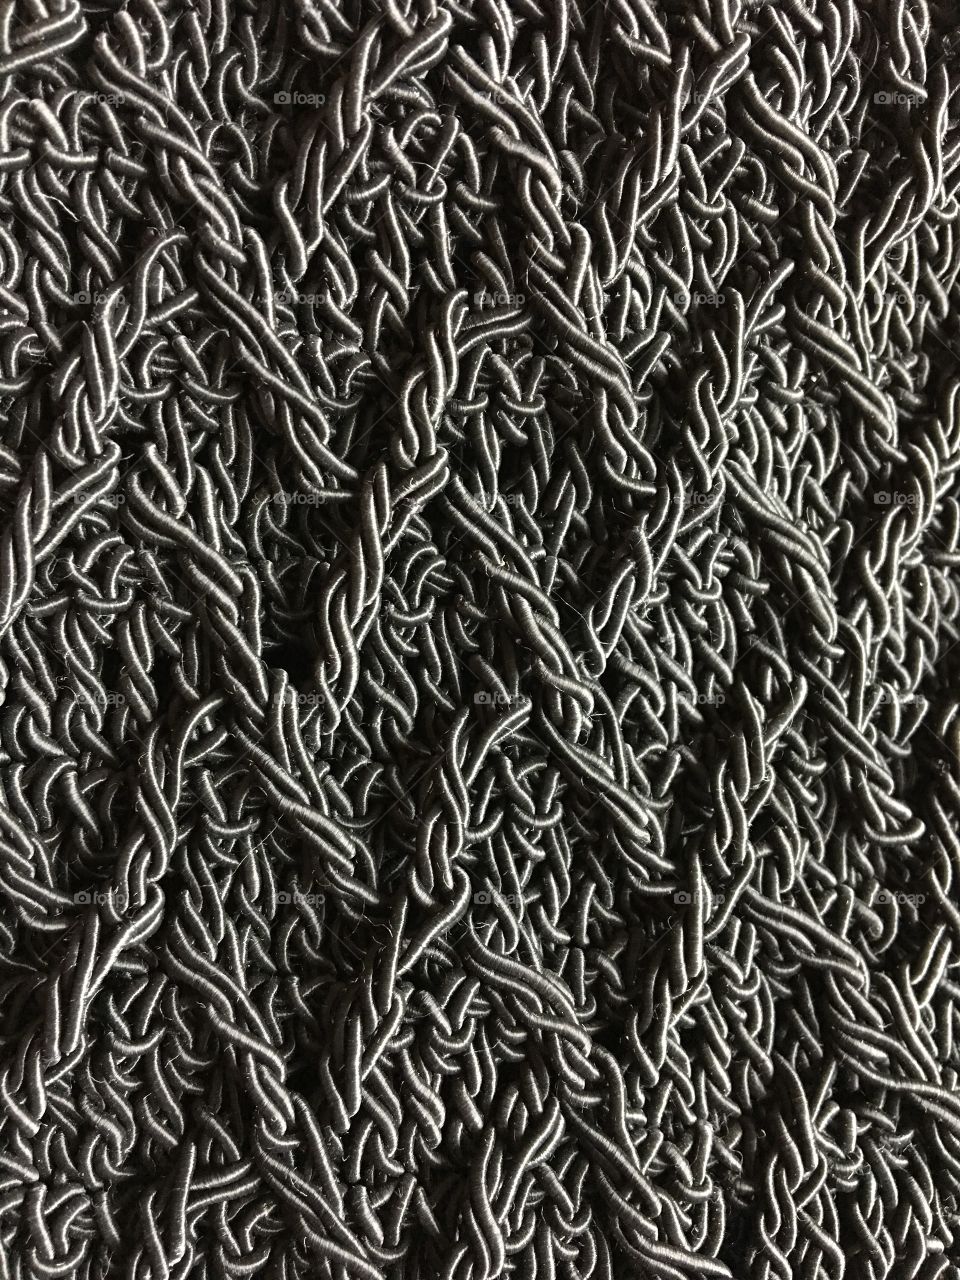 Pewter gray crocheted design